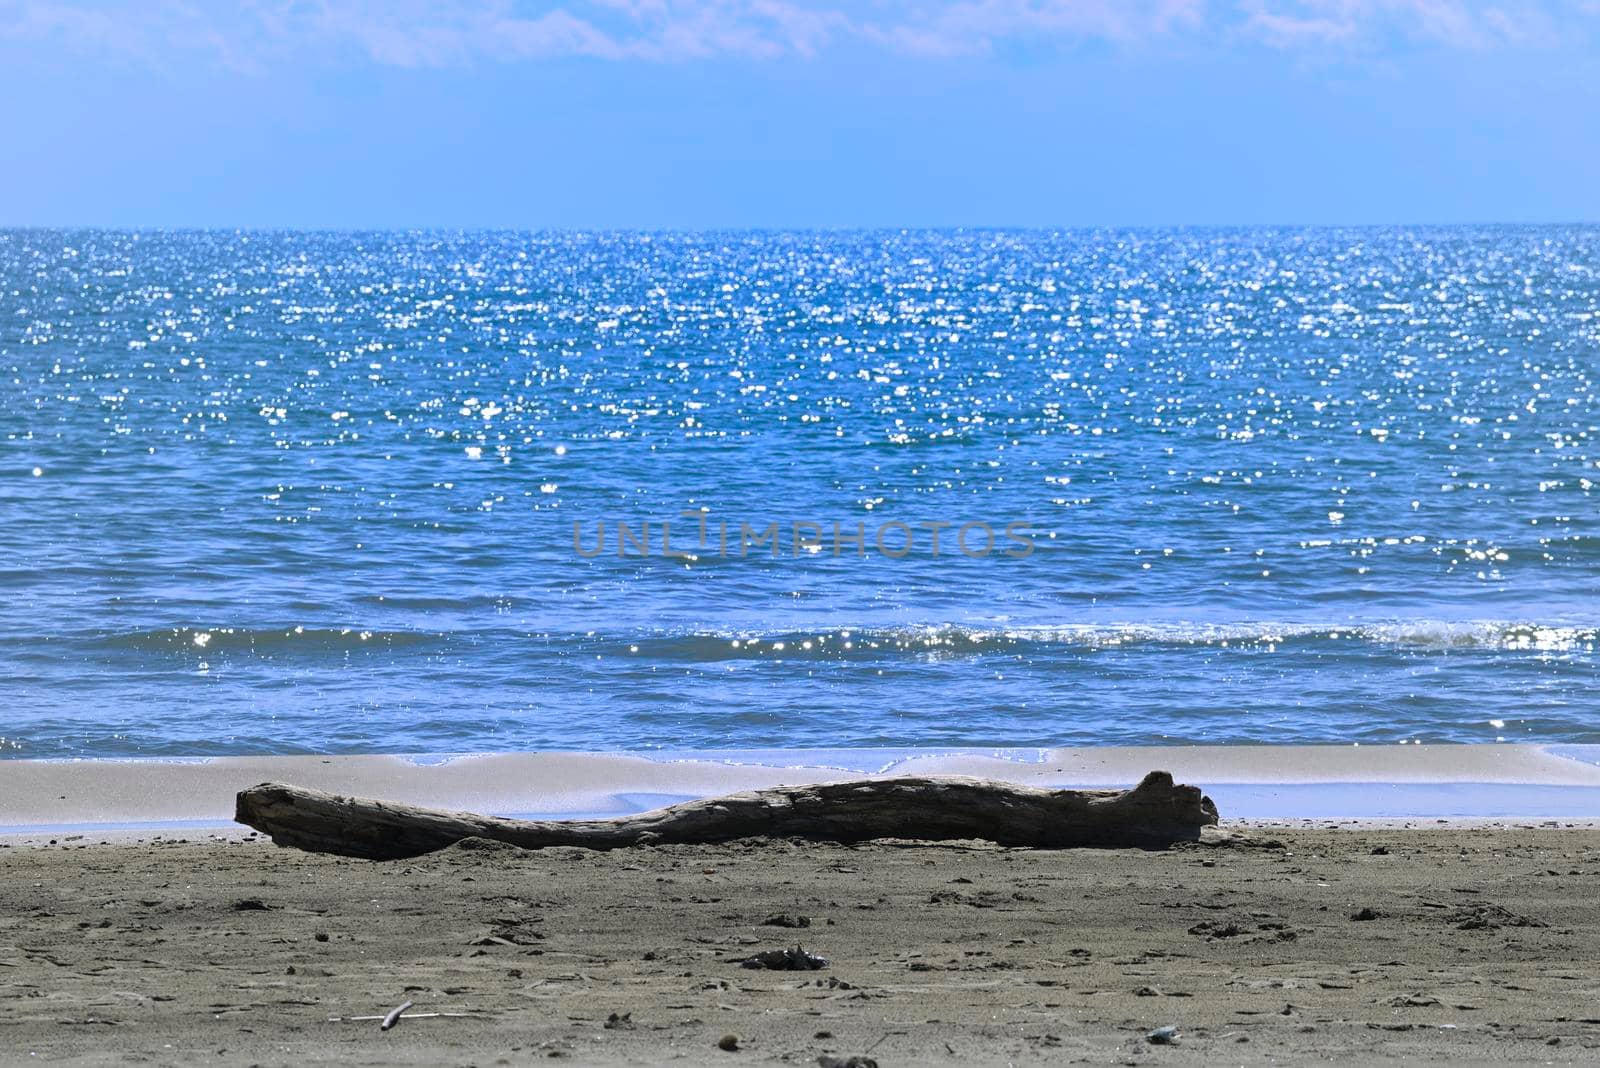 Mediterranean beach detail with sand, shells, driftwood under high sun